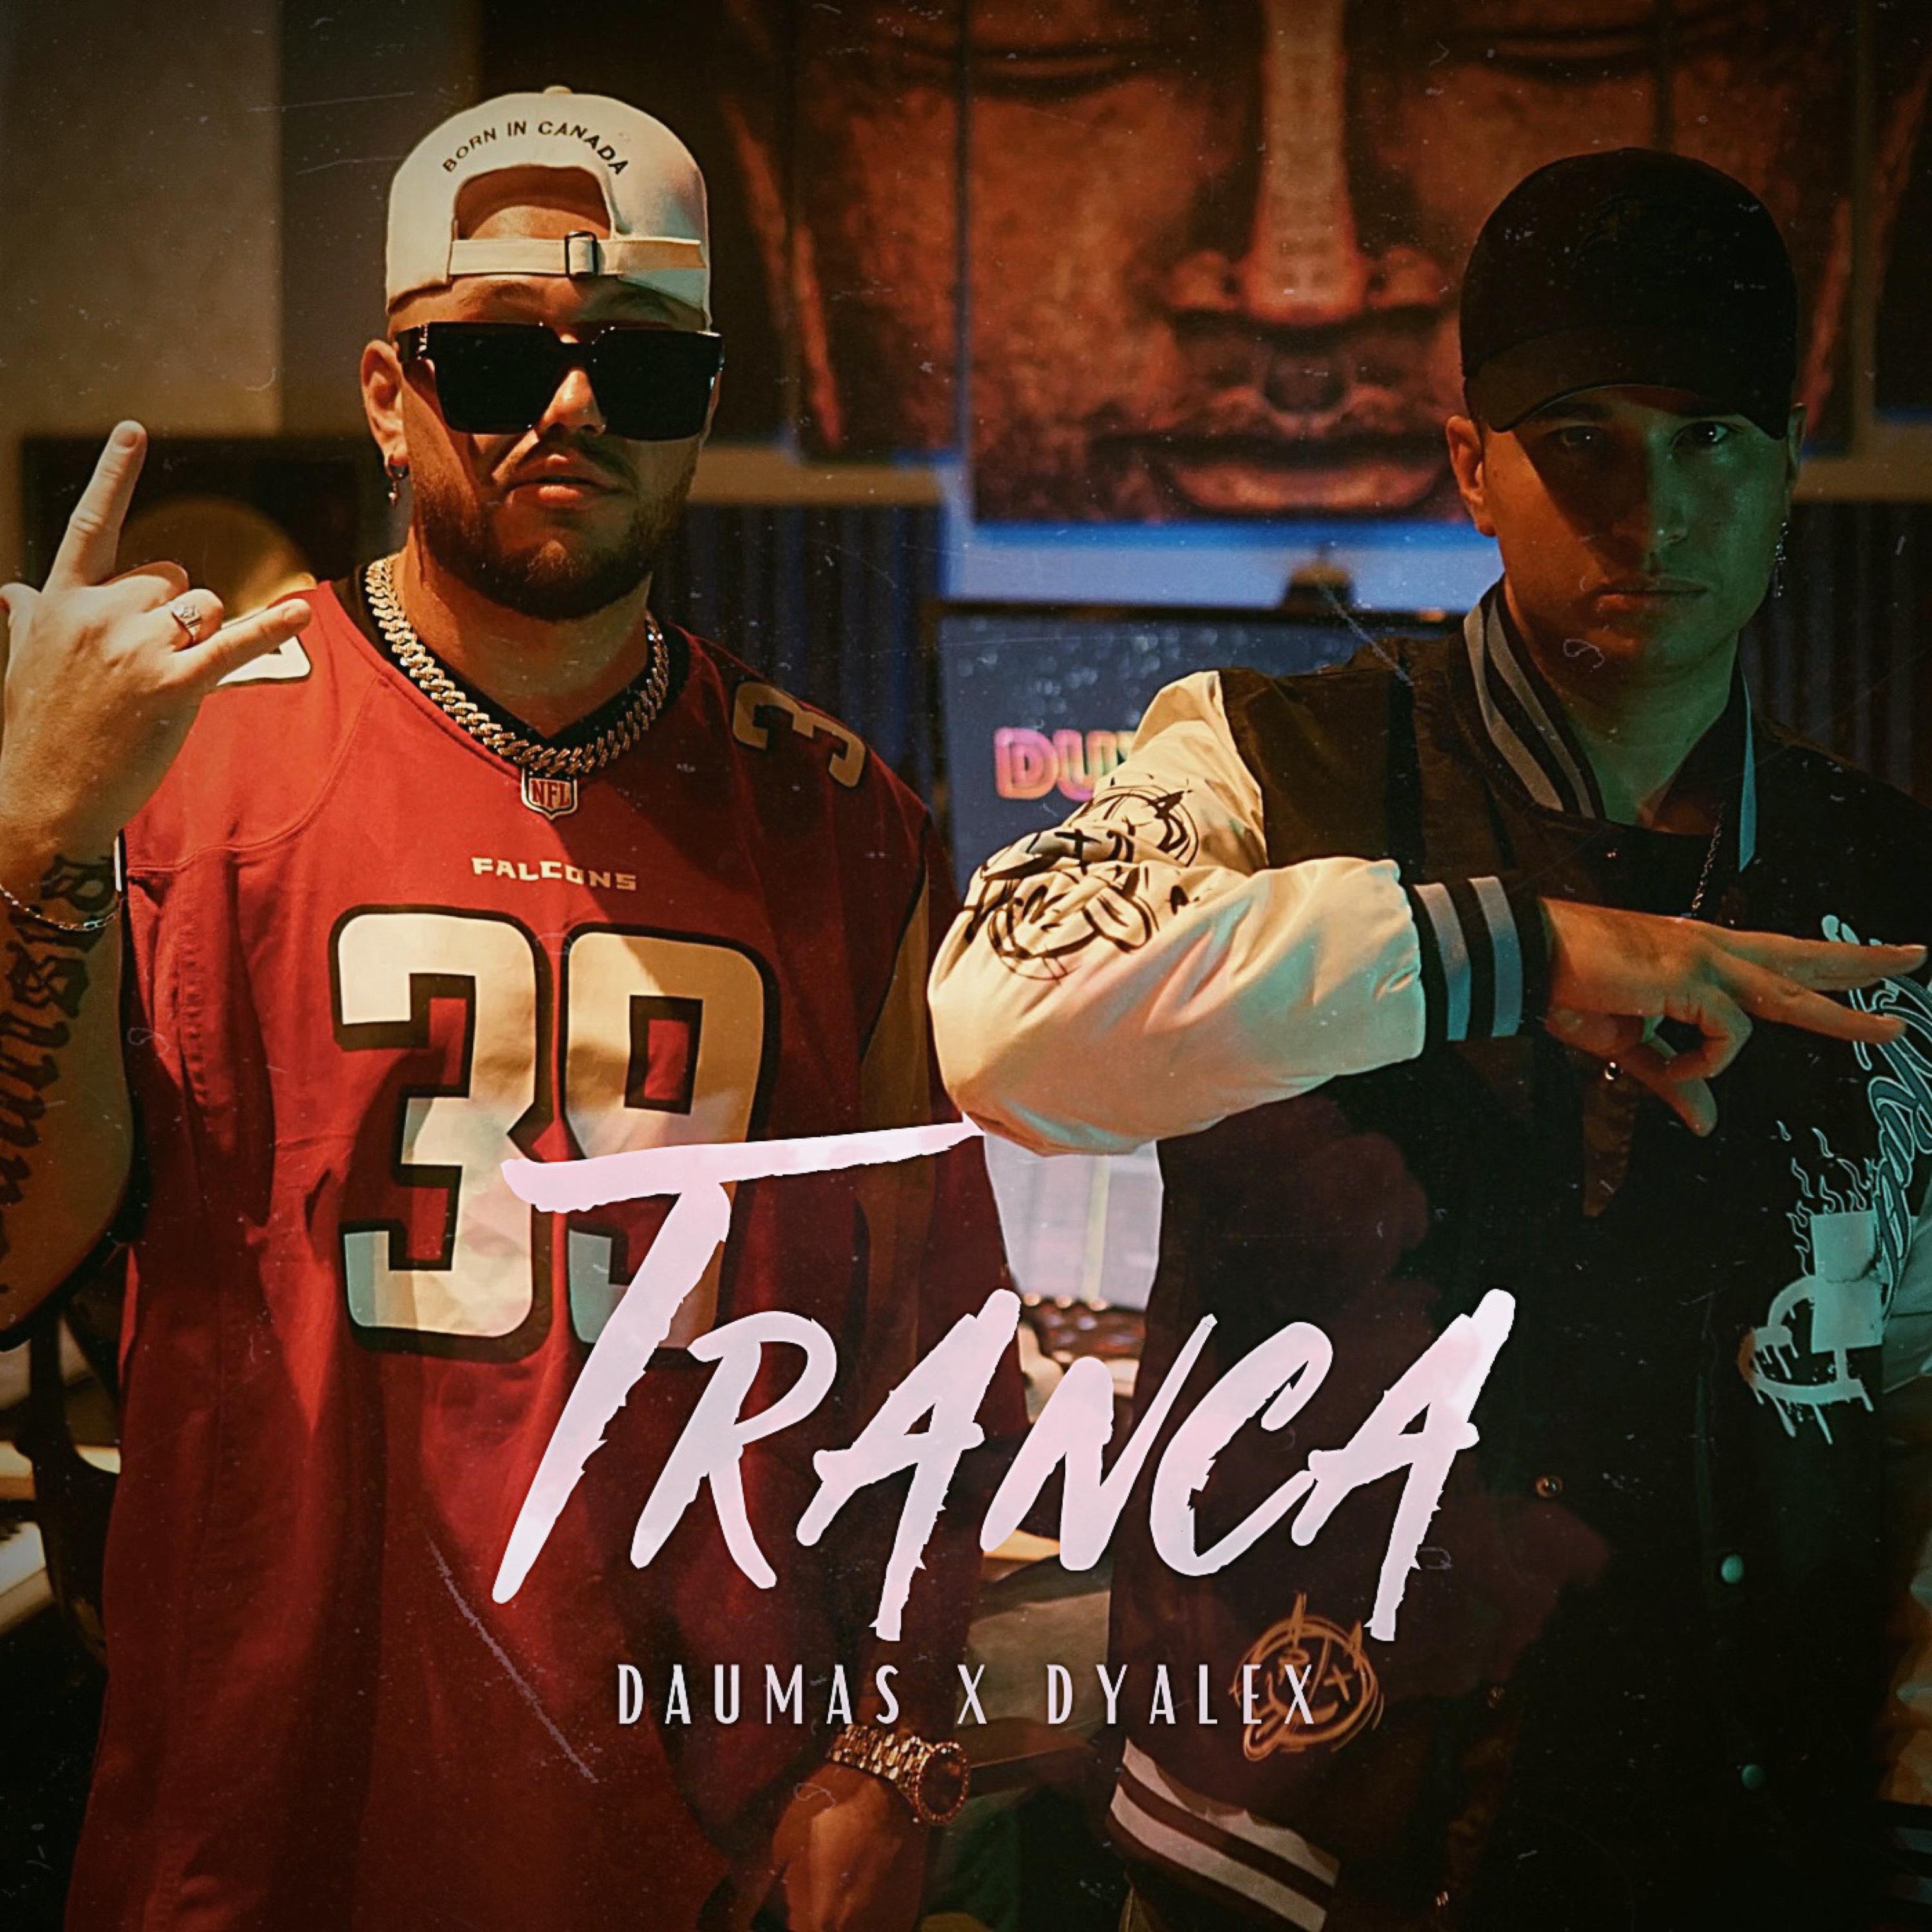 Постер альбома Tranca